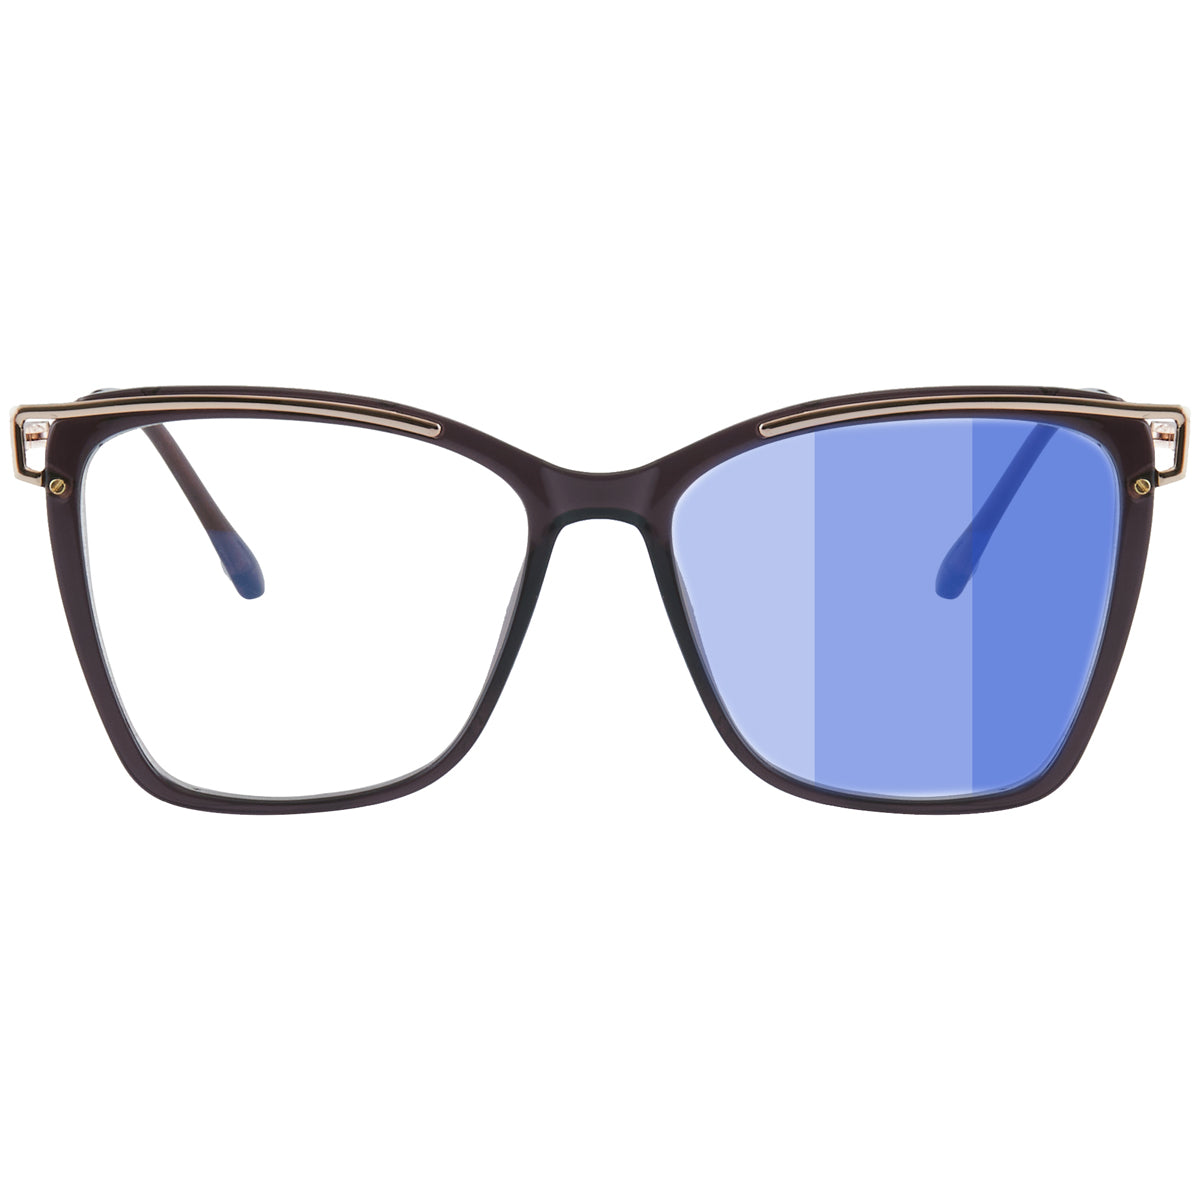 TXOME Persea Photochromic Glasses -TXOME